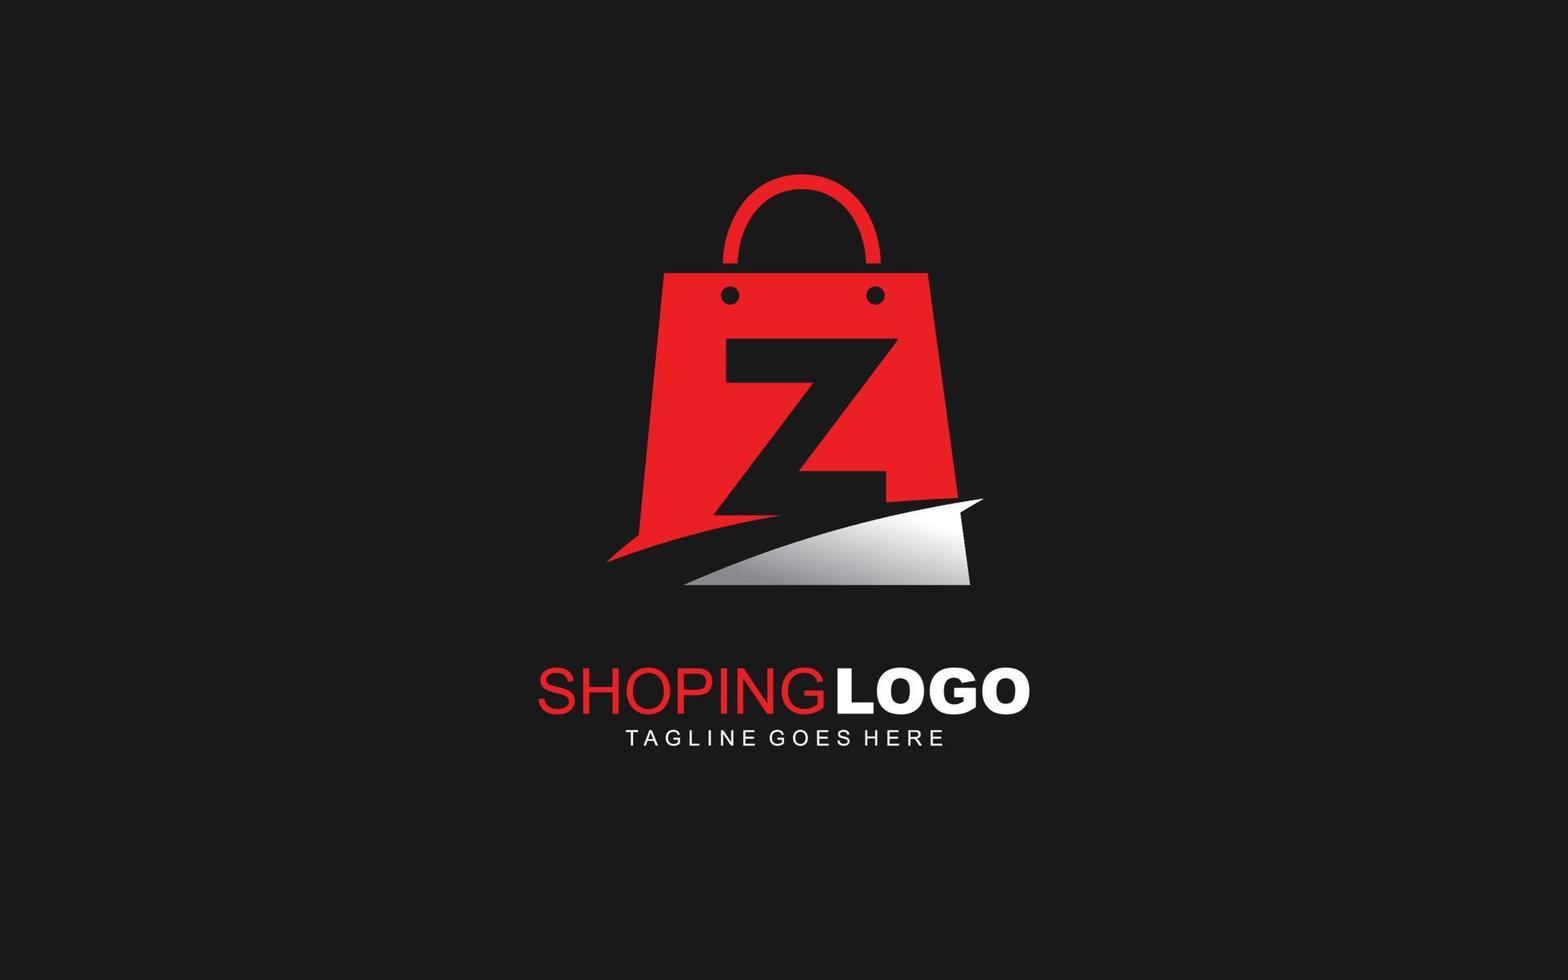 Z logo ONLINESHOP for branding company. BAG template vector illustration for your brand.